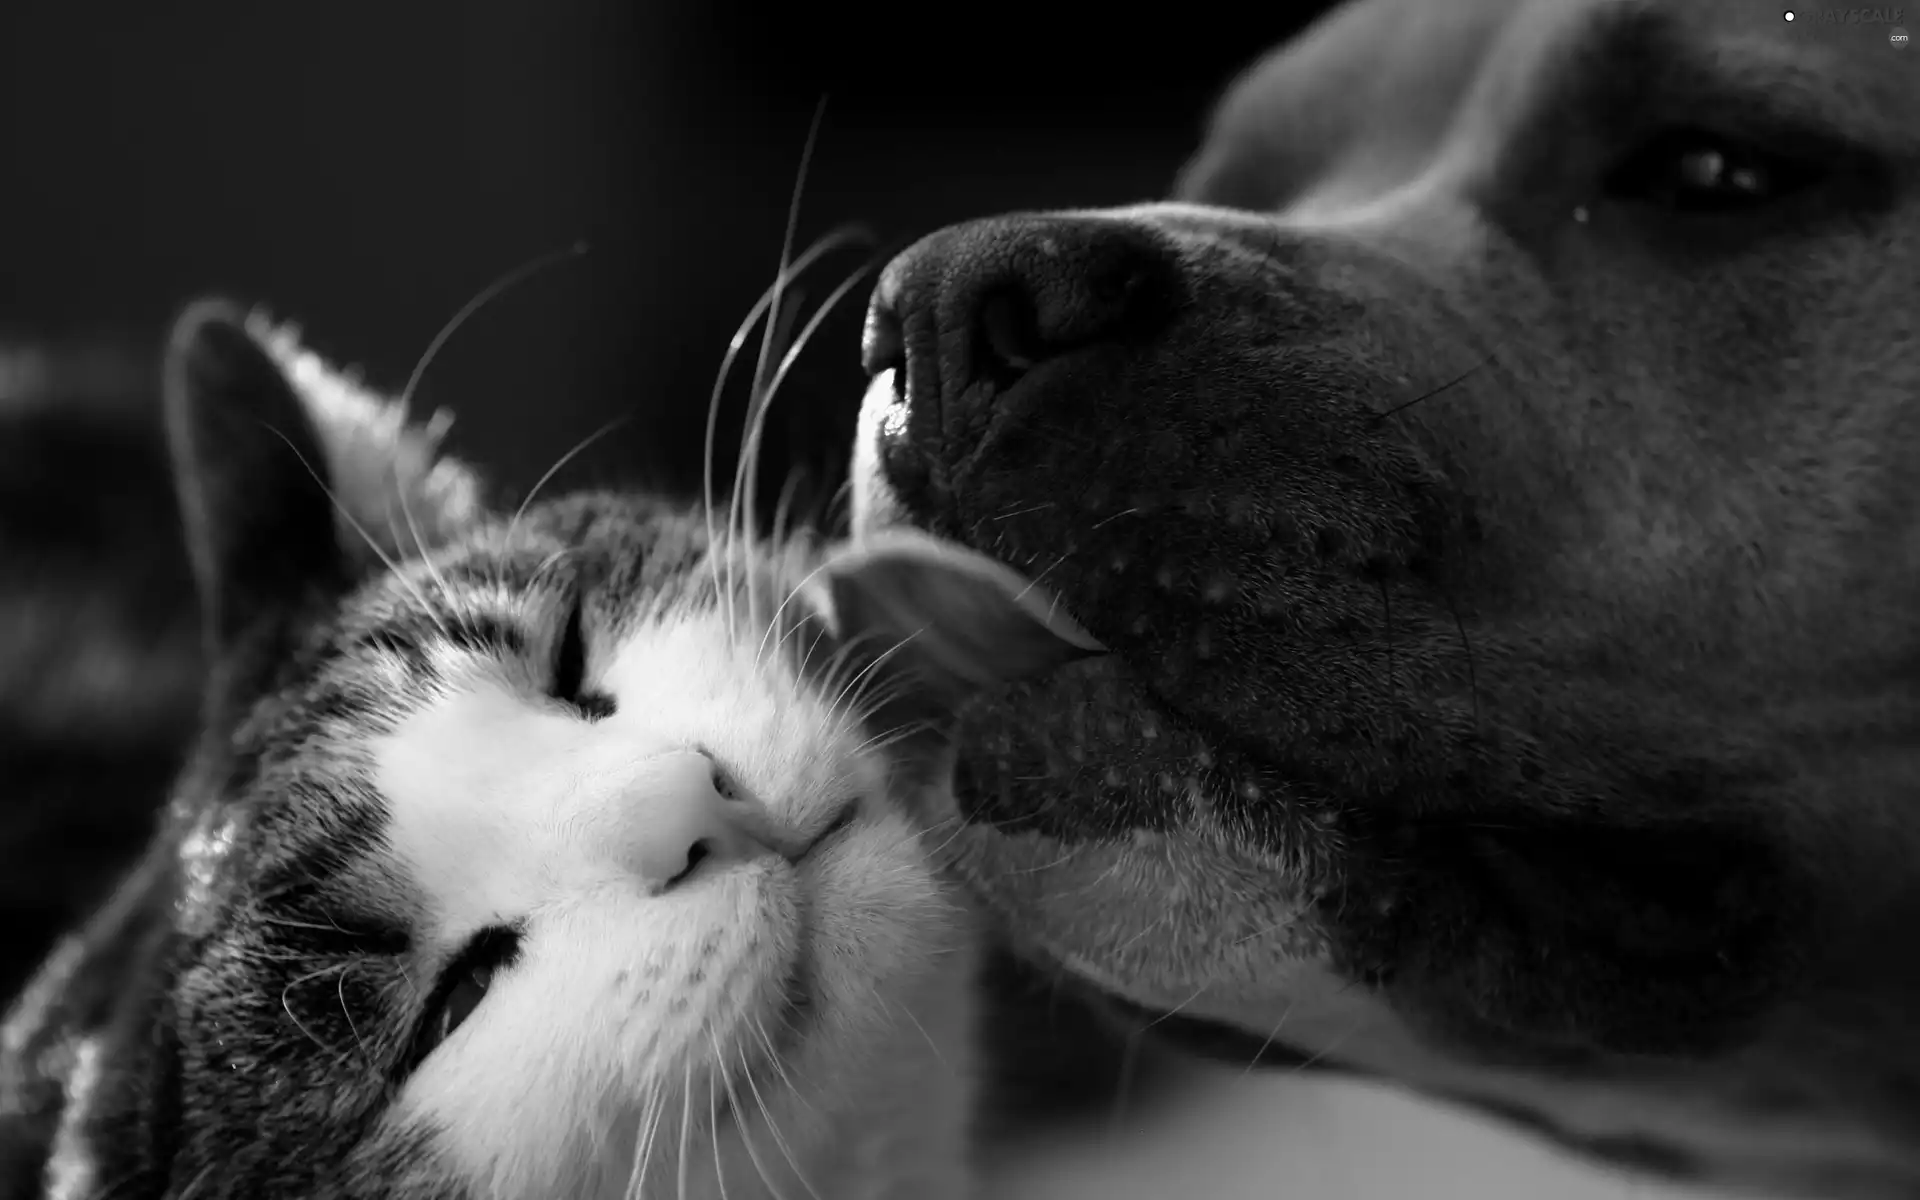 tenderness, dog, cat